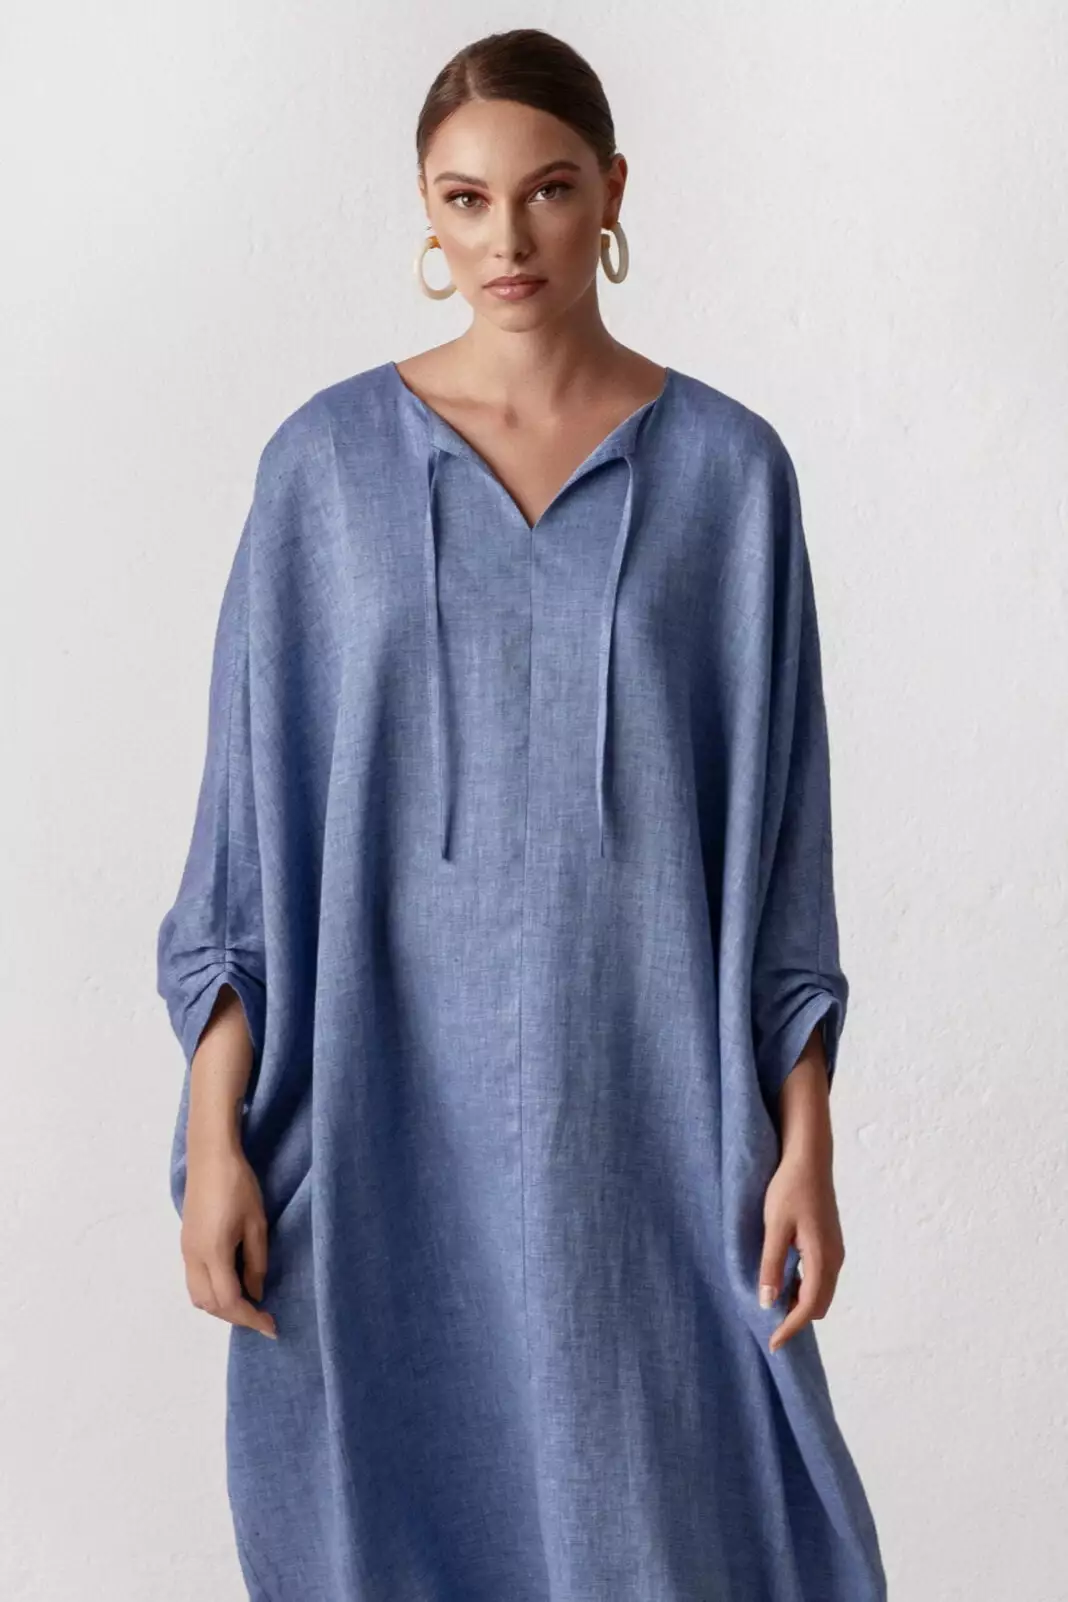 Elegant Blue Linen Kaftan Maxi Dress - Stylish Summer Attire